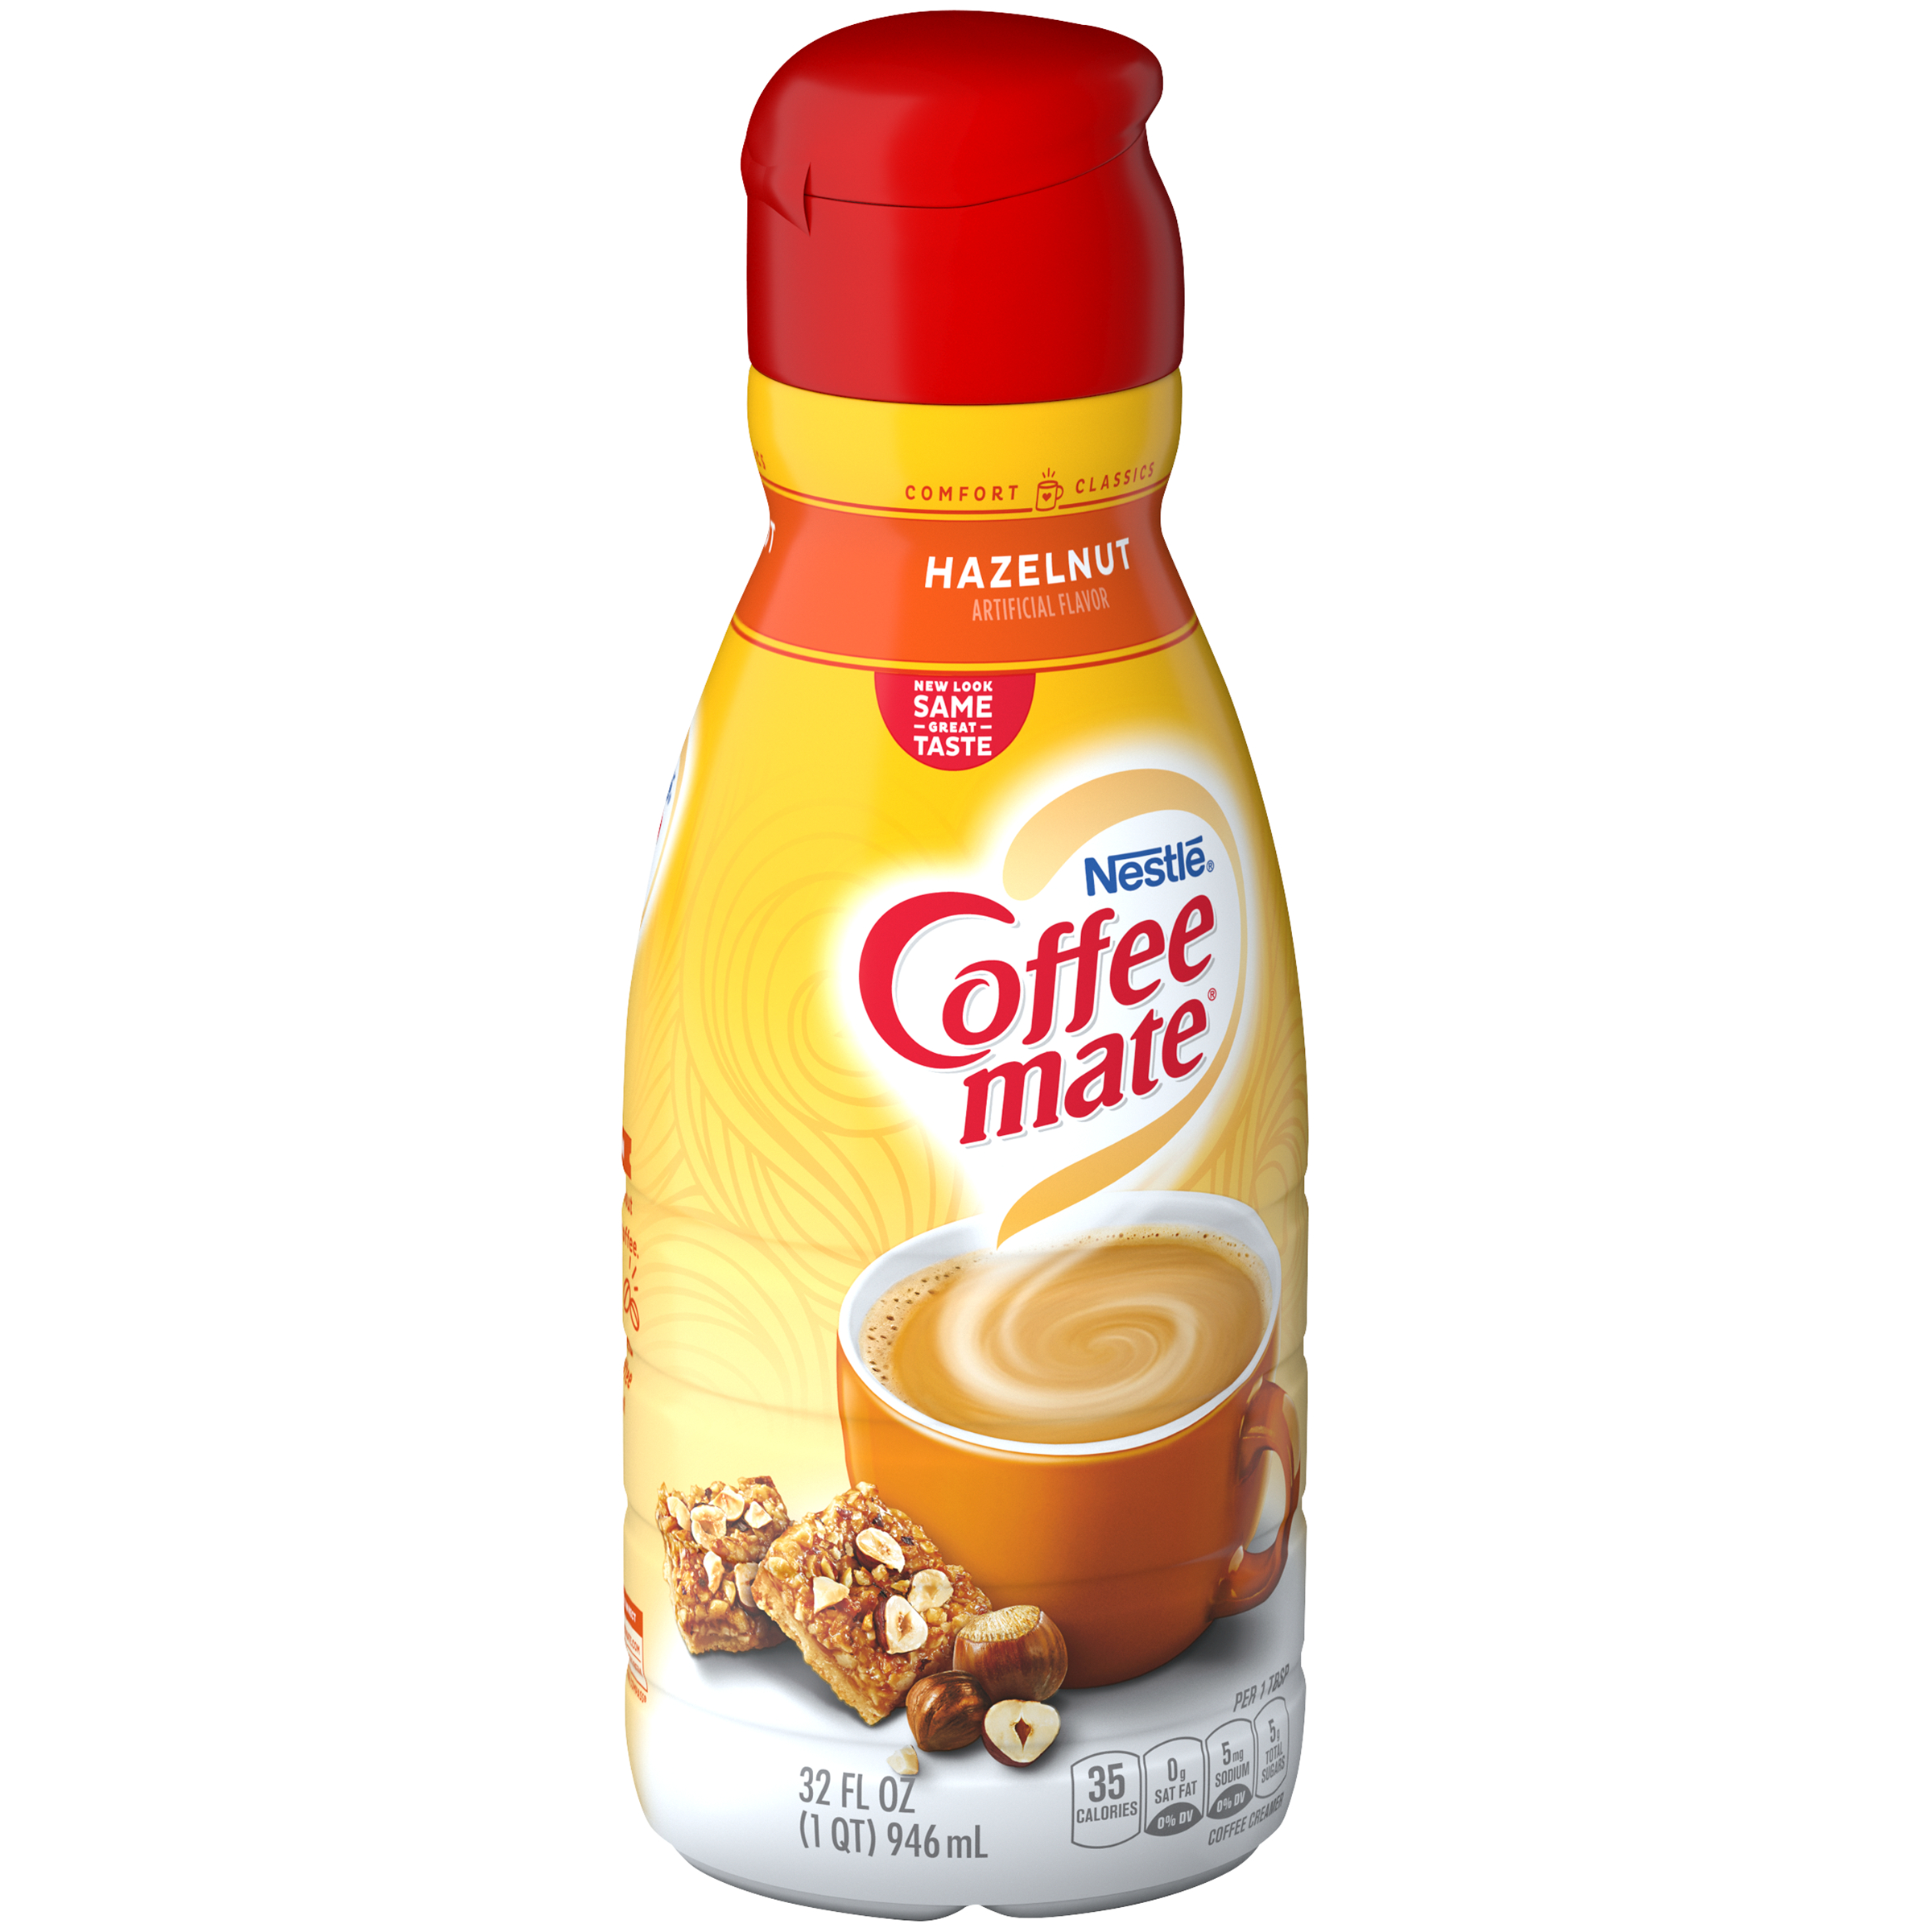 Coffee-mate Coffee Creamer, Hazelnut, 32 fl oz (1 qt) 946 ml